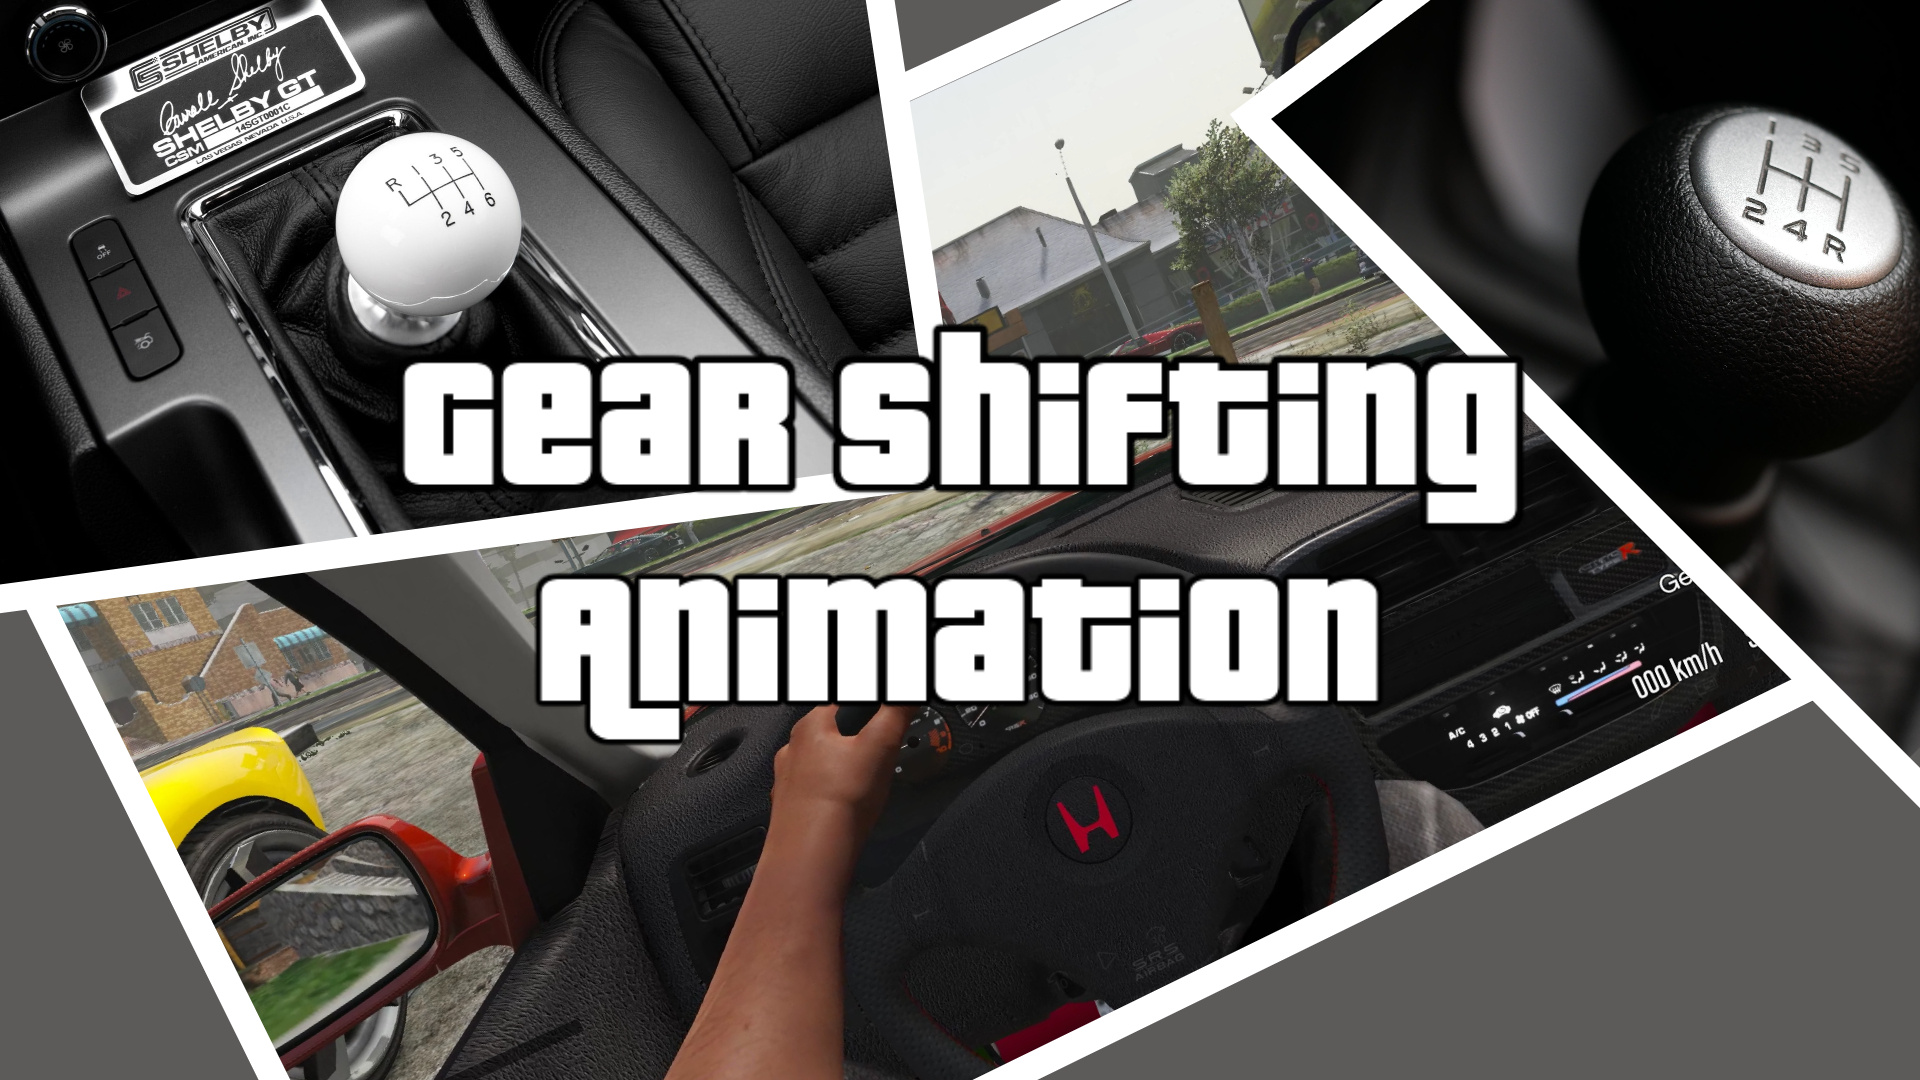 Gear shifting animation GTA 5. Gear Shifters игра. Шифтинг скрипт. Коды на шифтинг.